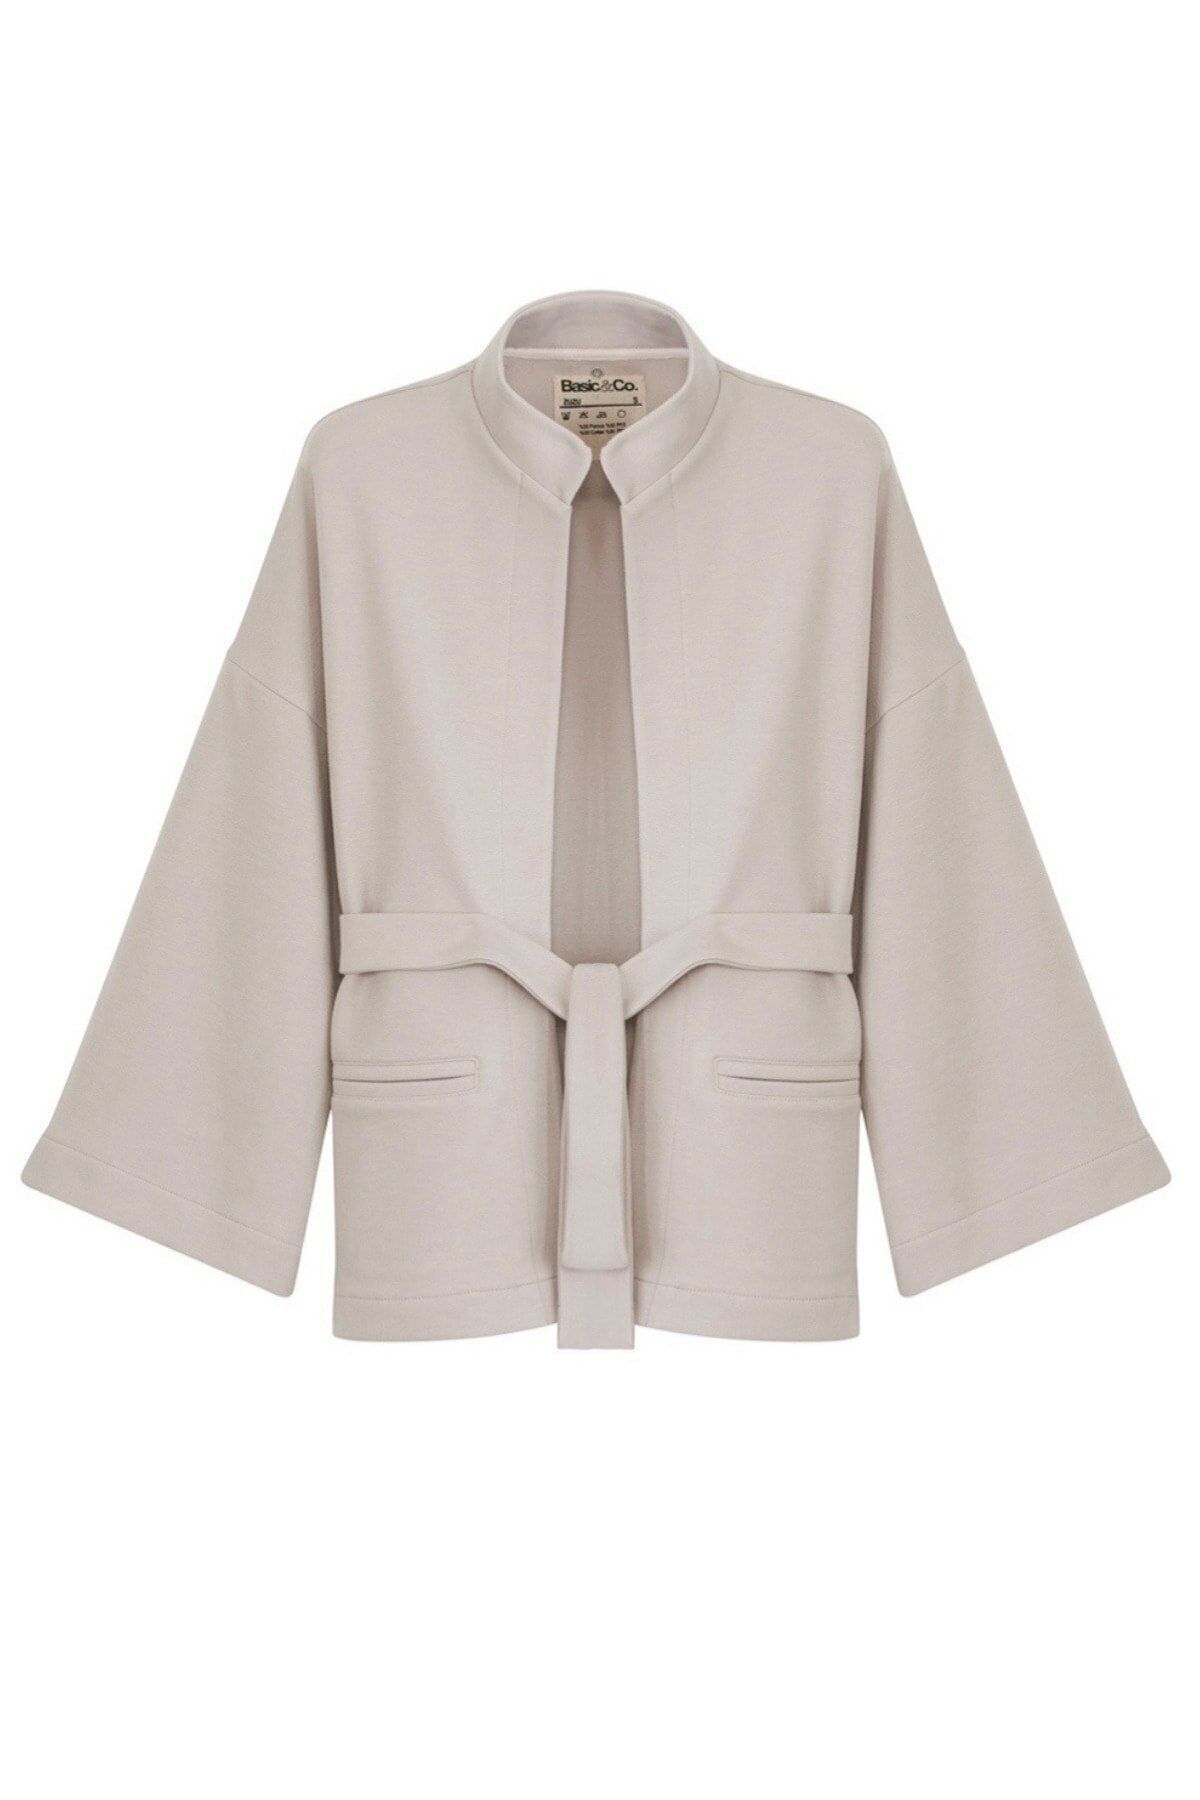 Basic Co Zuzu Bej Kimono Ceket - Modal